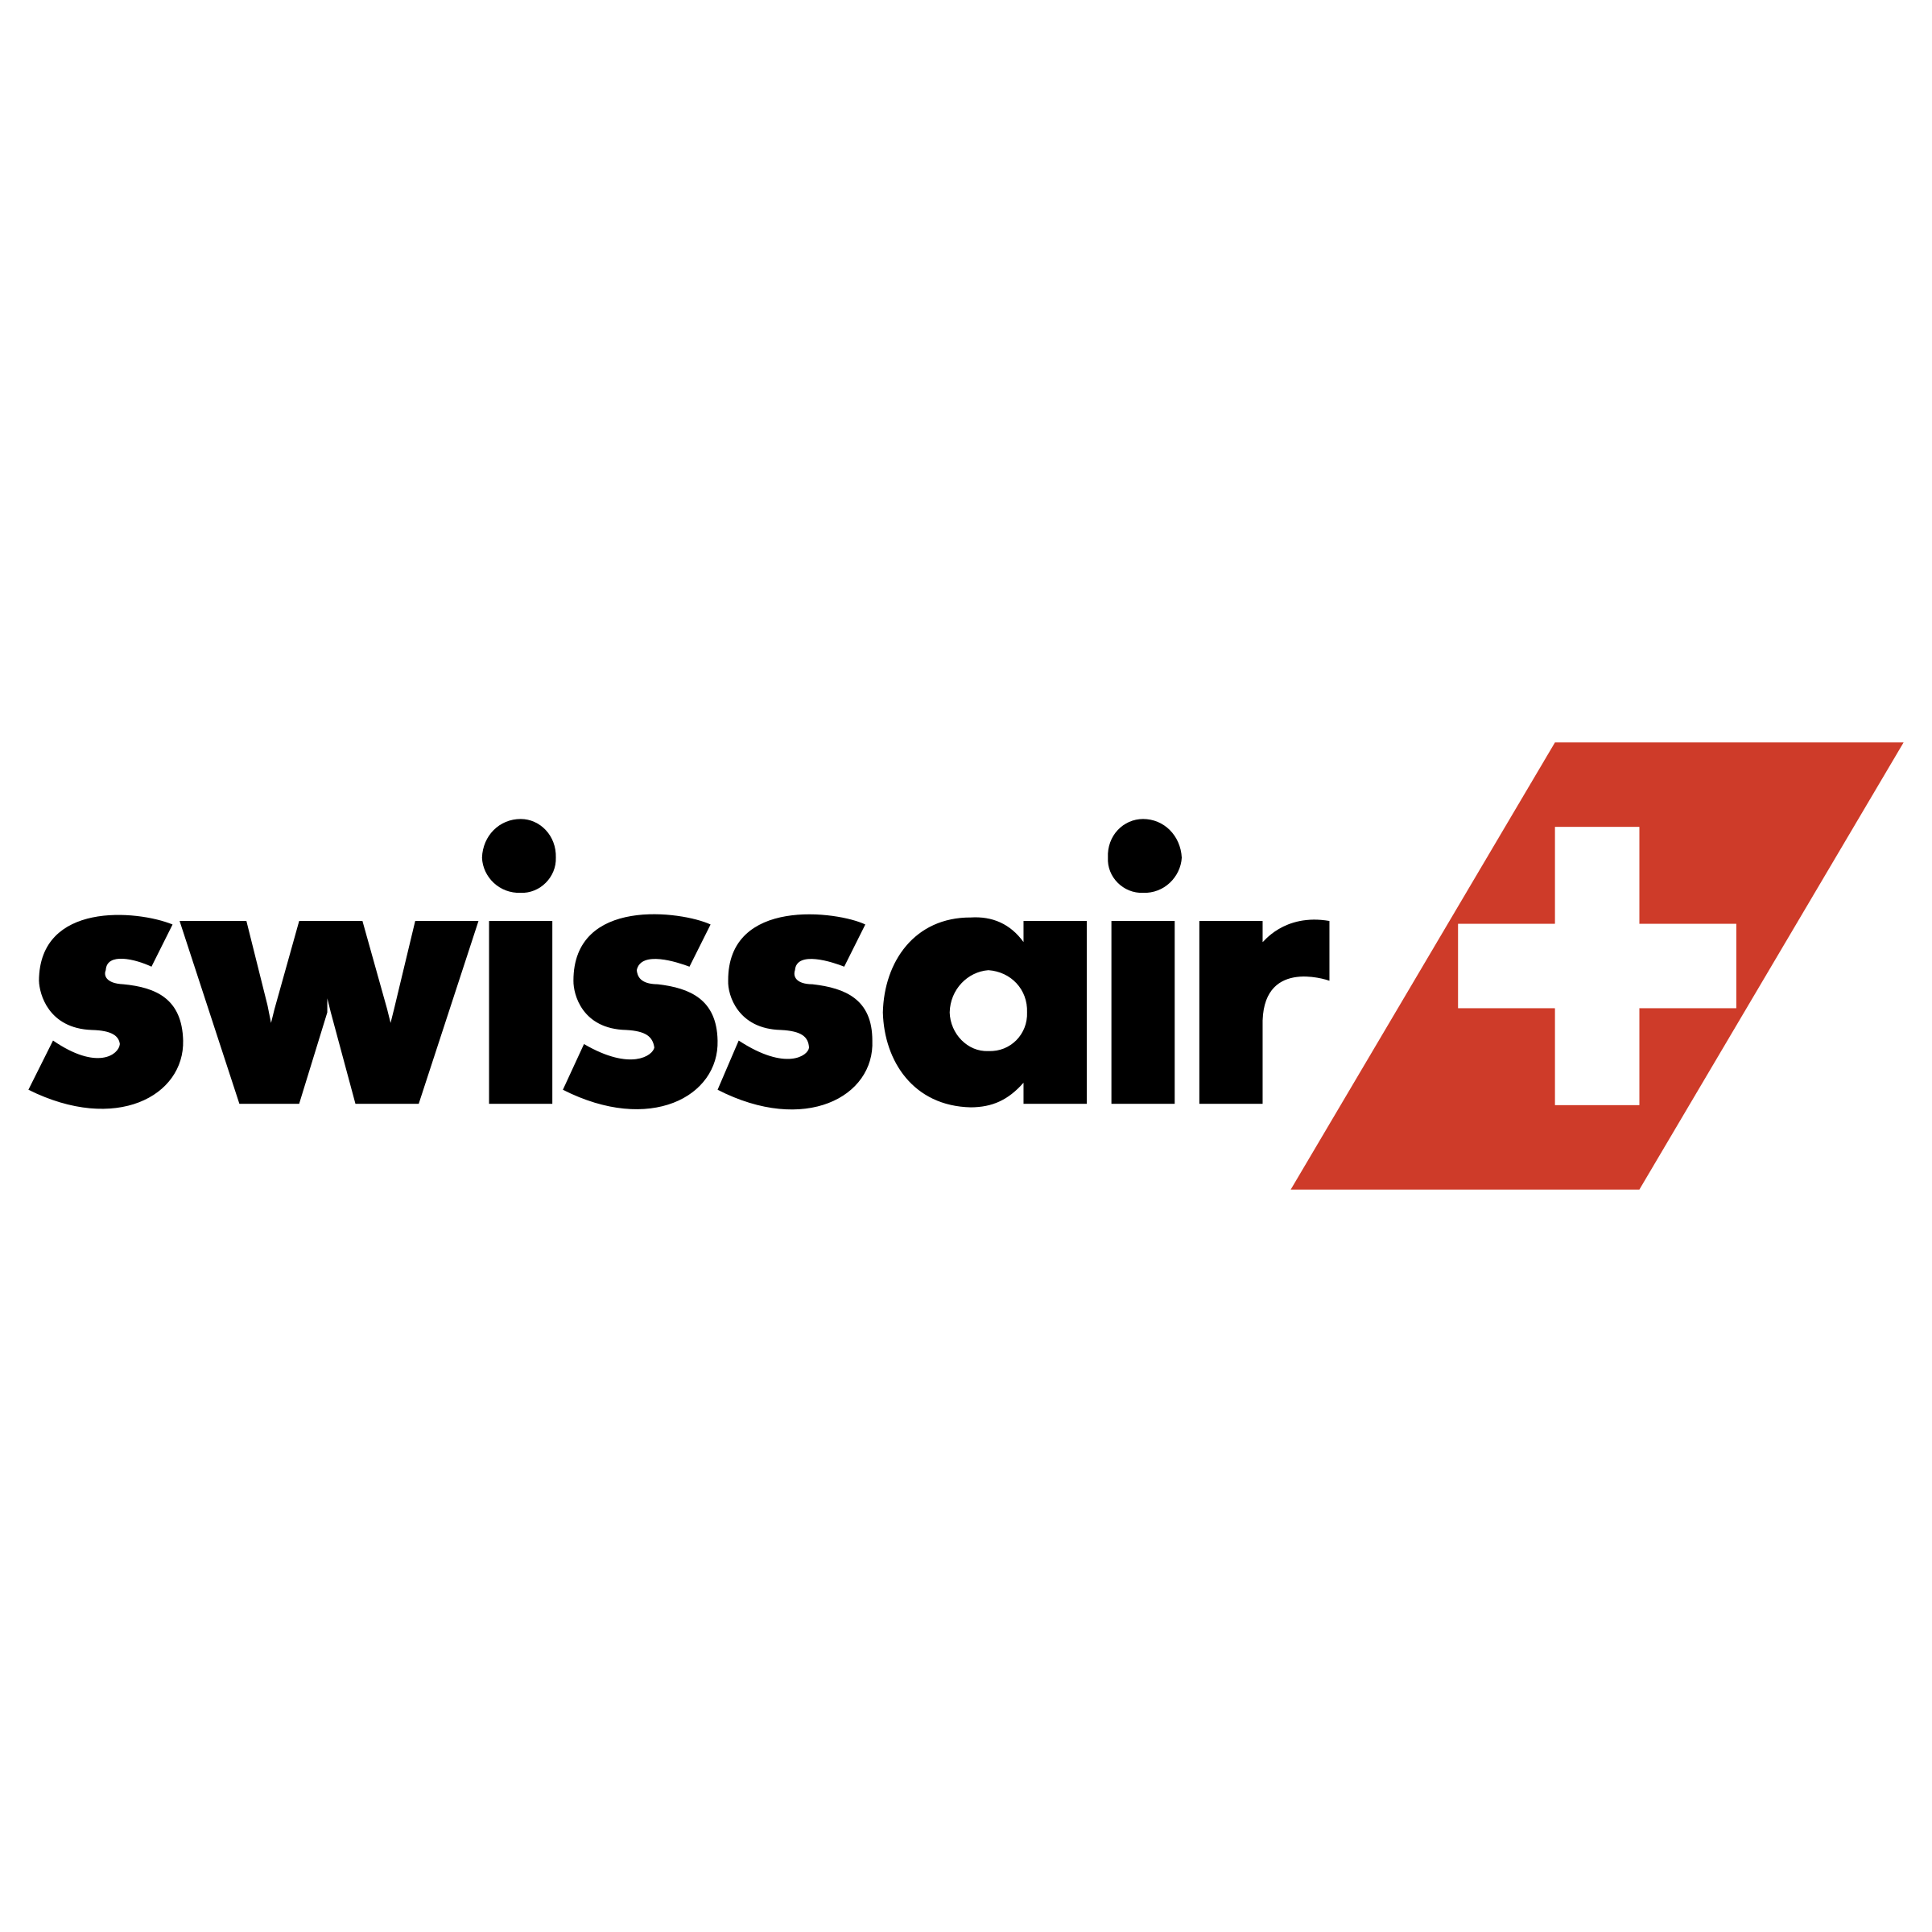 Swiss Air Logo - Swissair Logo PNG Transparent & SVG Vector - Freebie Supply